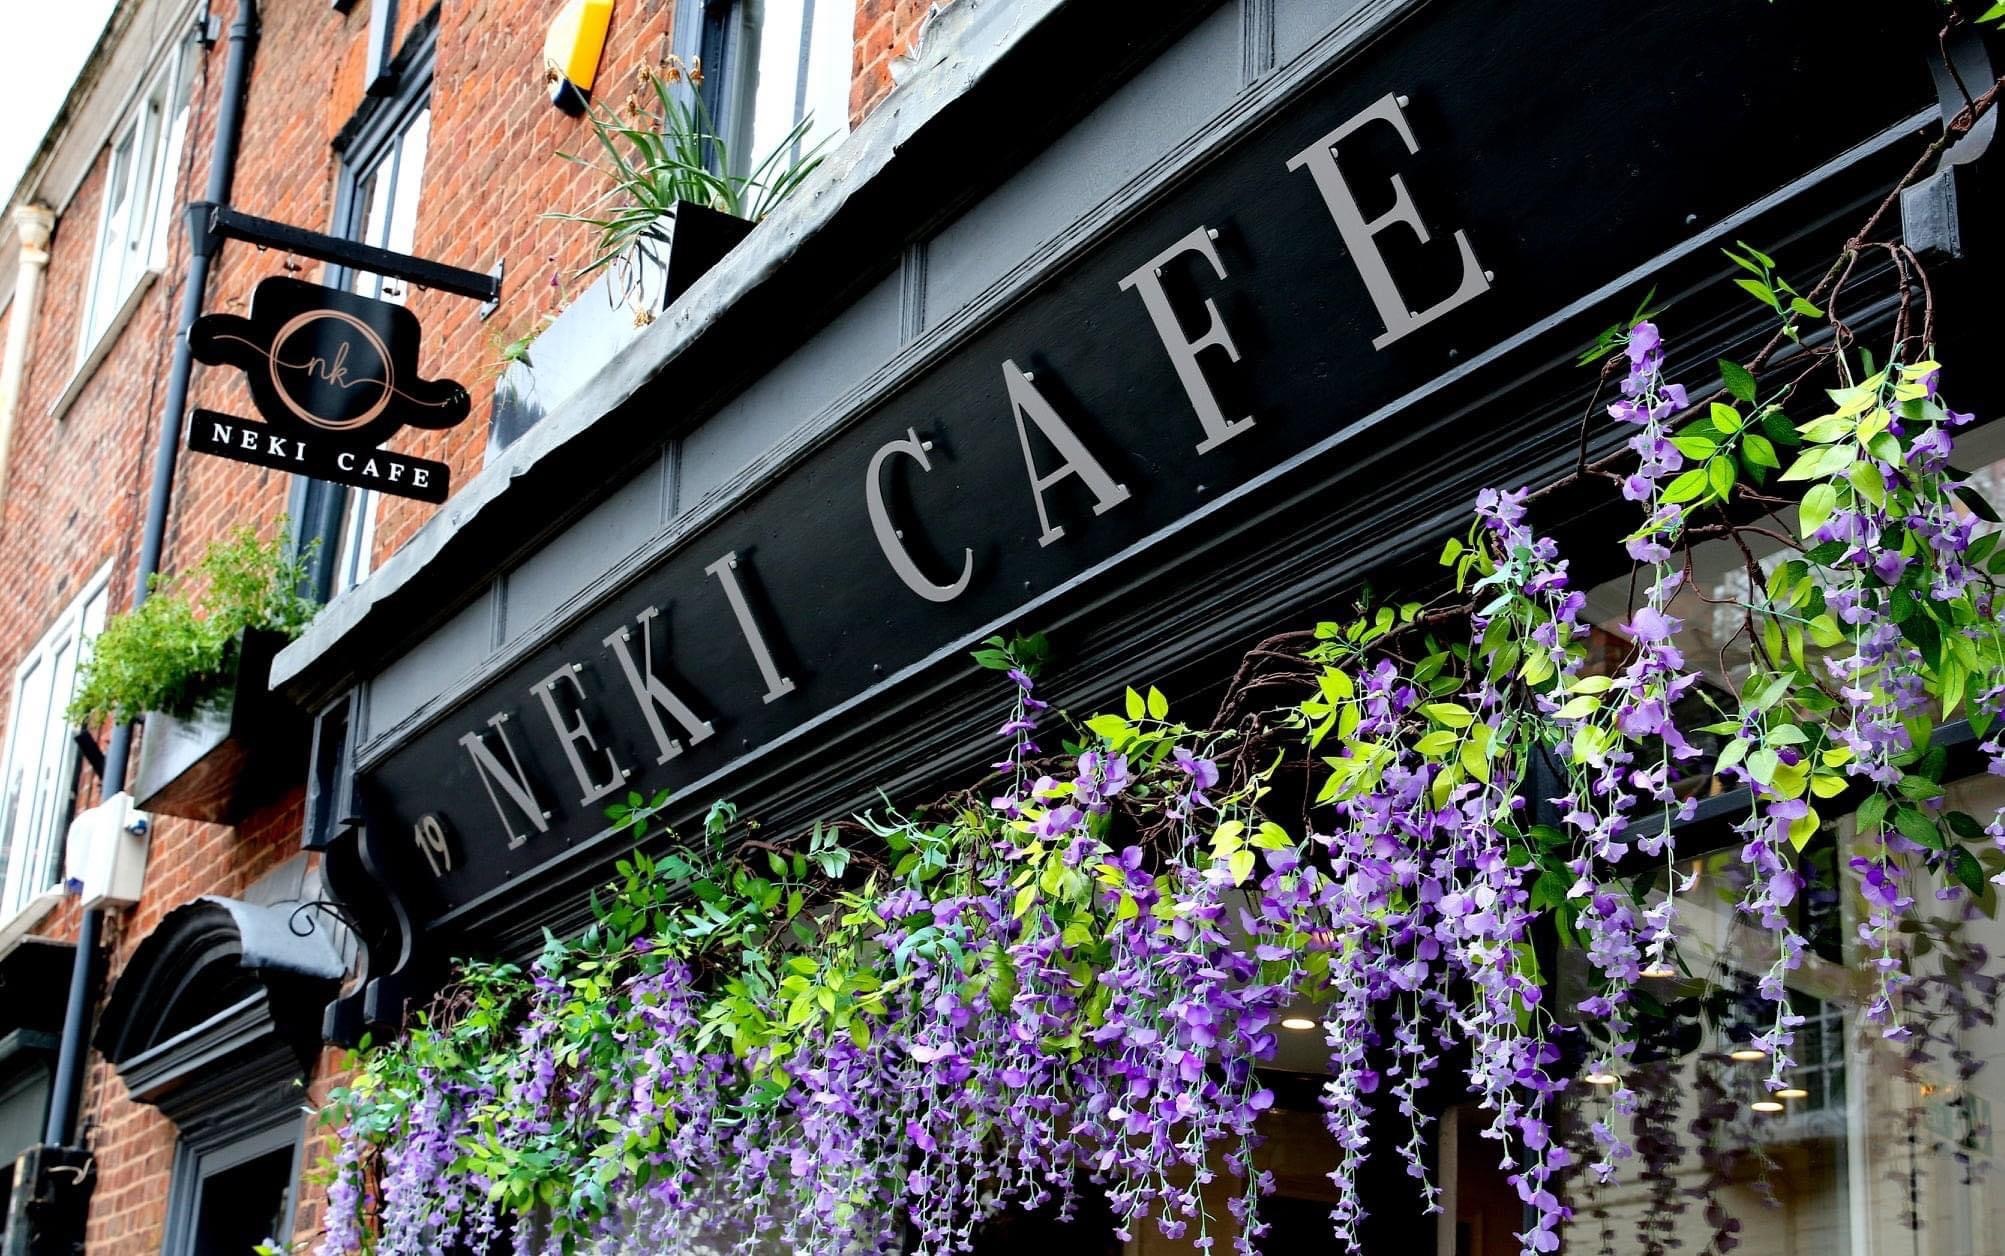 Neki Café opened on King Street in October 2019